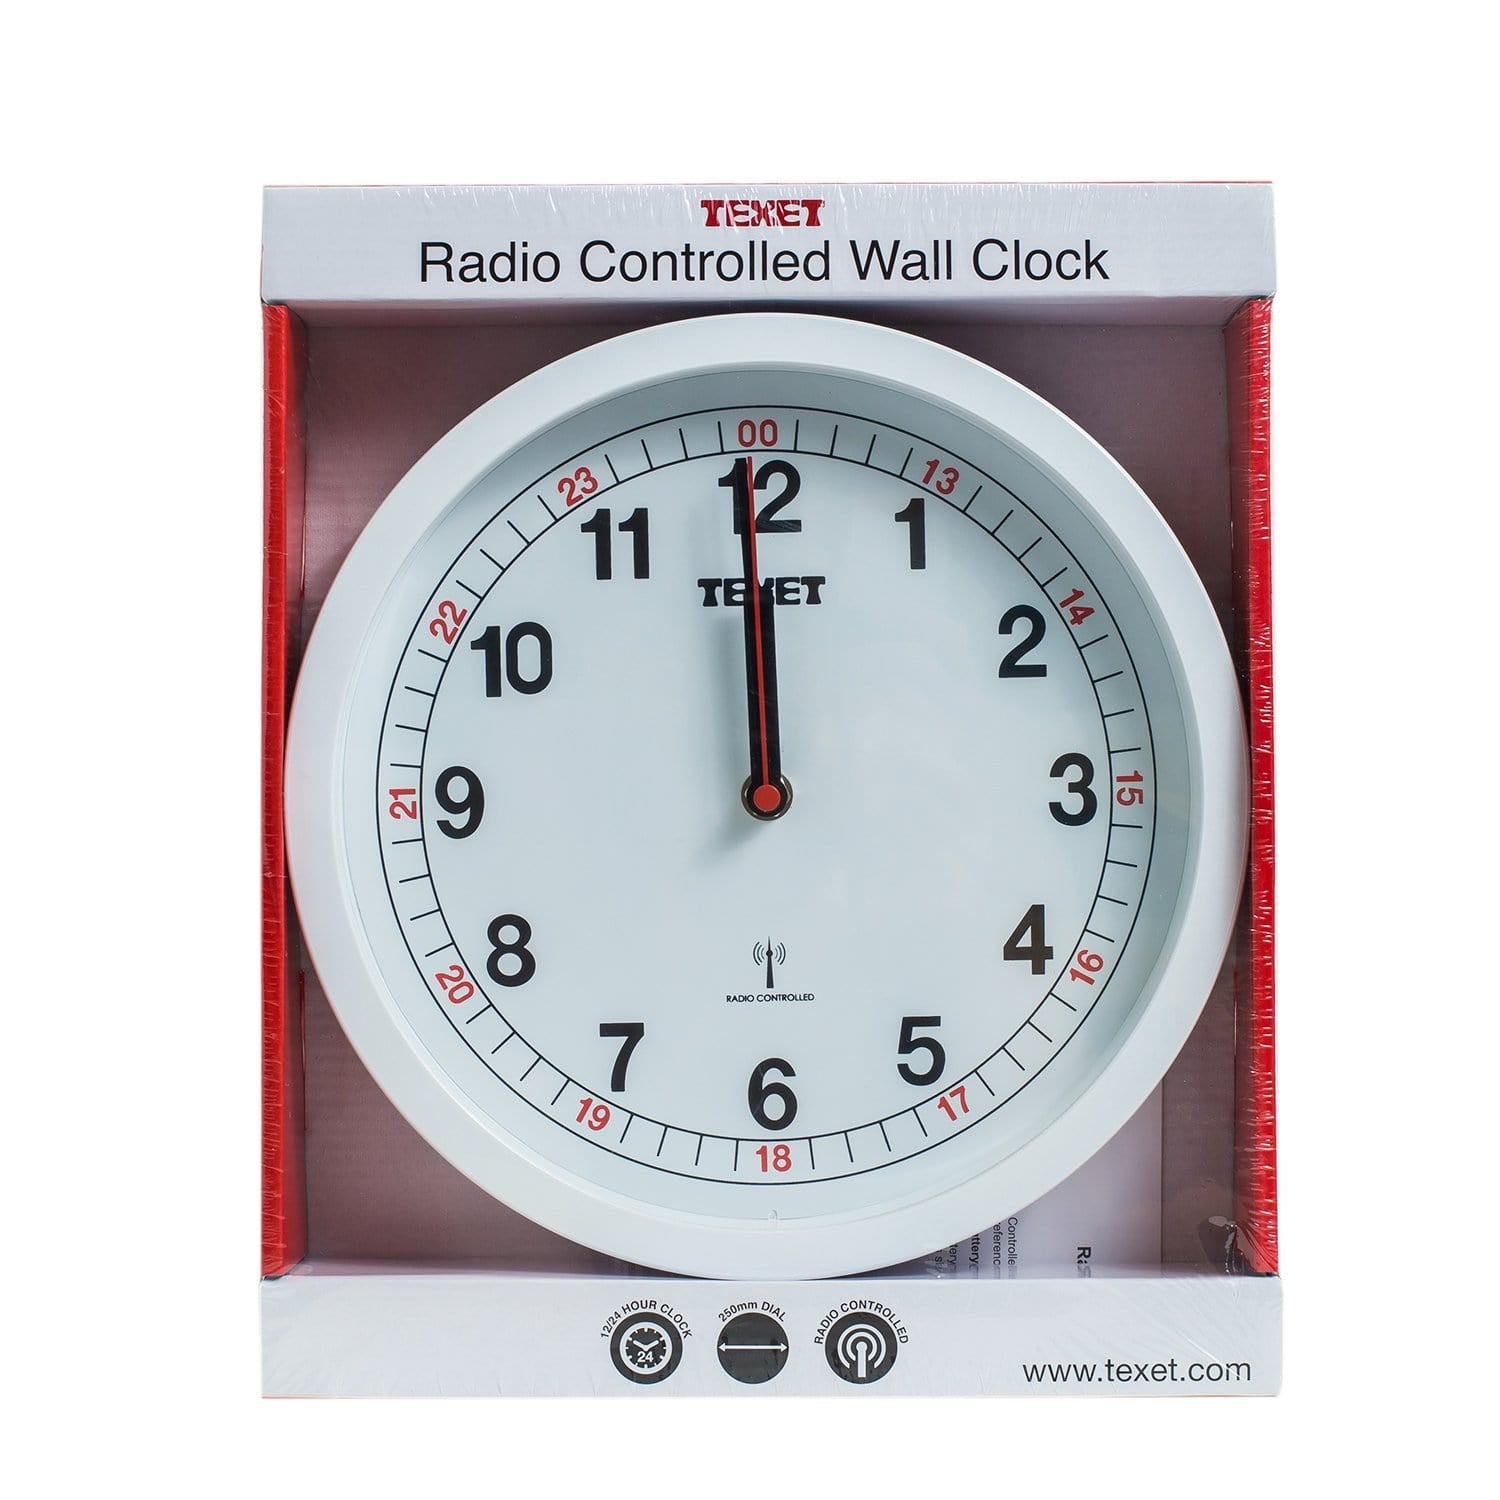 Radio Controlled Wall Clock